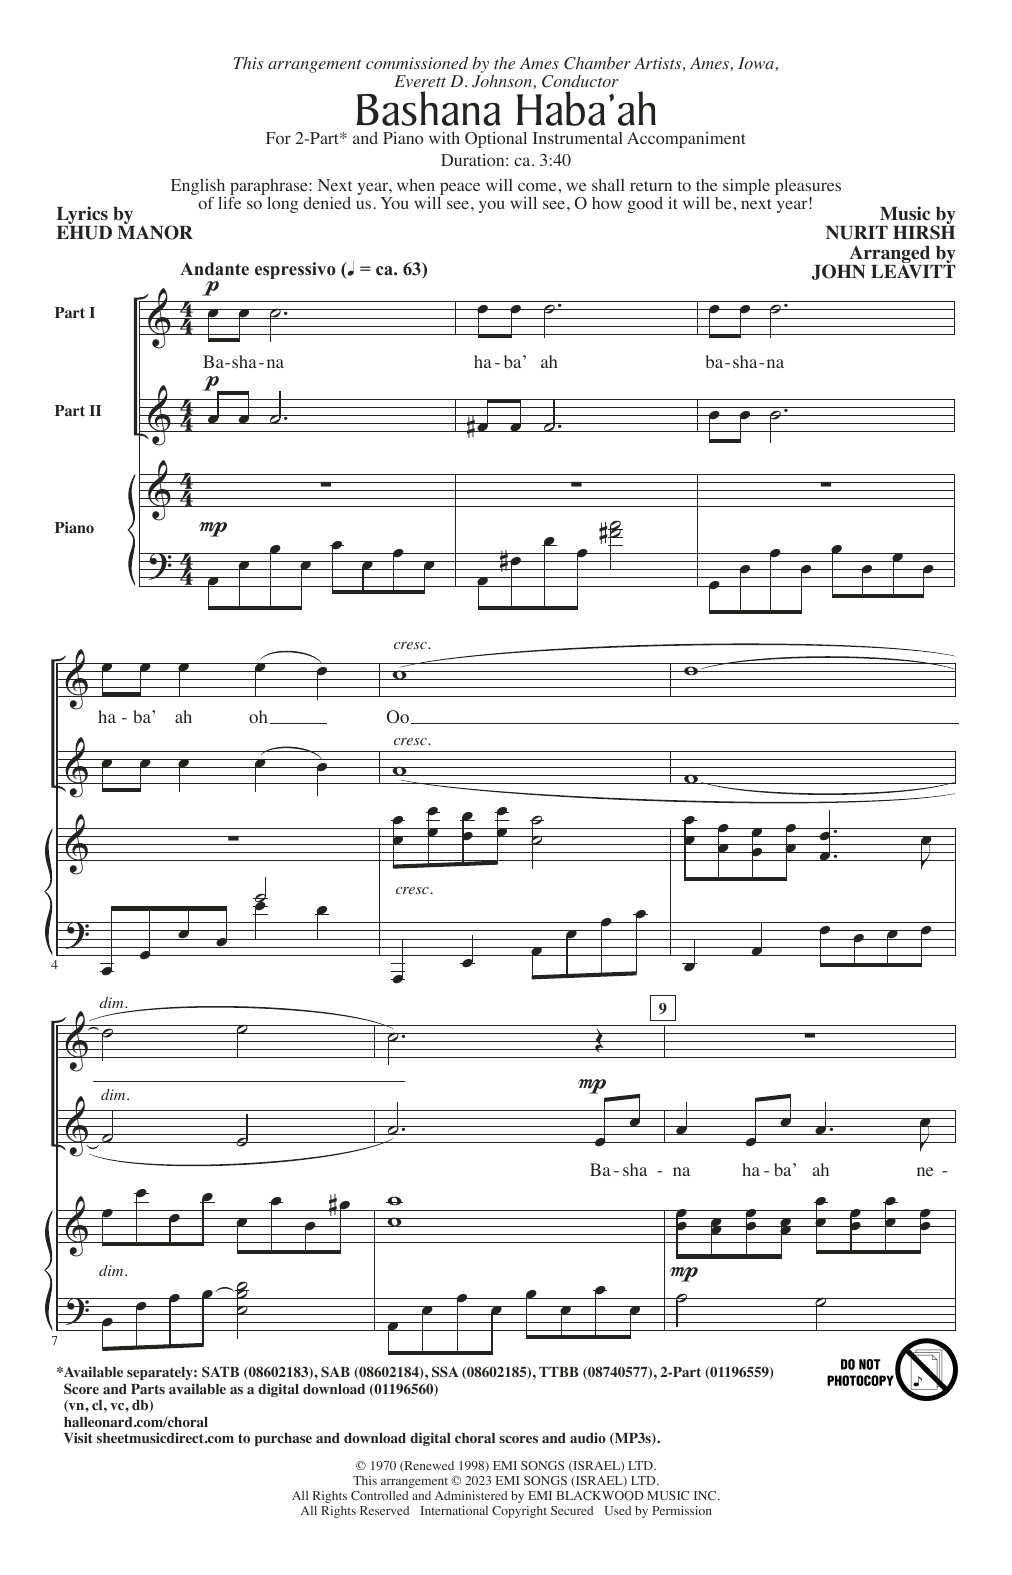 Download Nurit Hirsh Bashana Haba 'Ah (arr. John Leavitt) Sheet Music and learn how to play 2-Part Choir PDF digital score in minutes